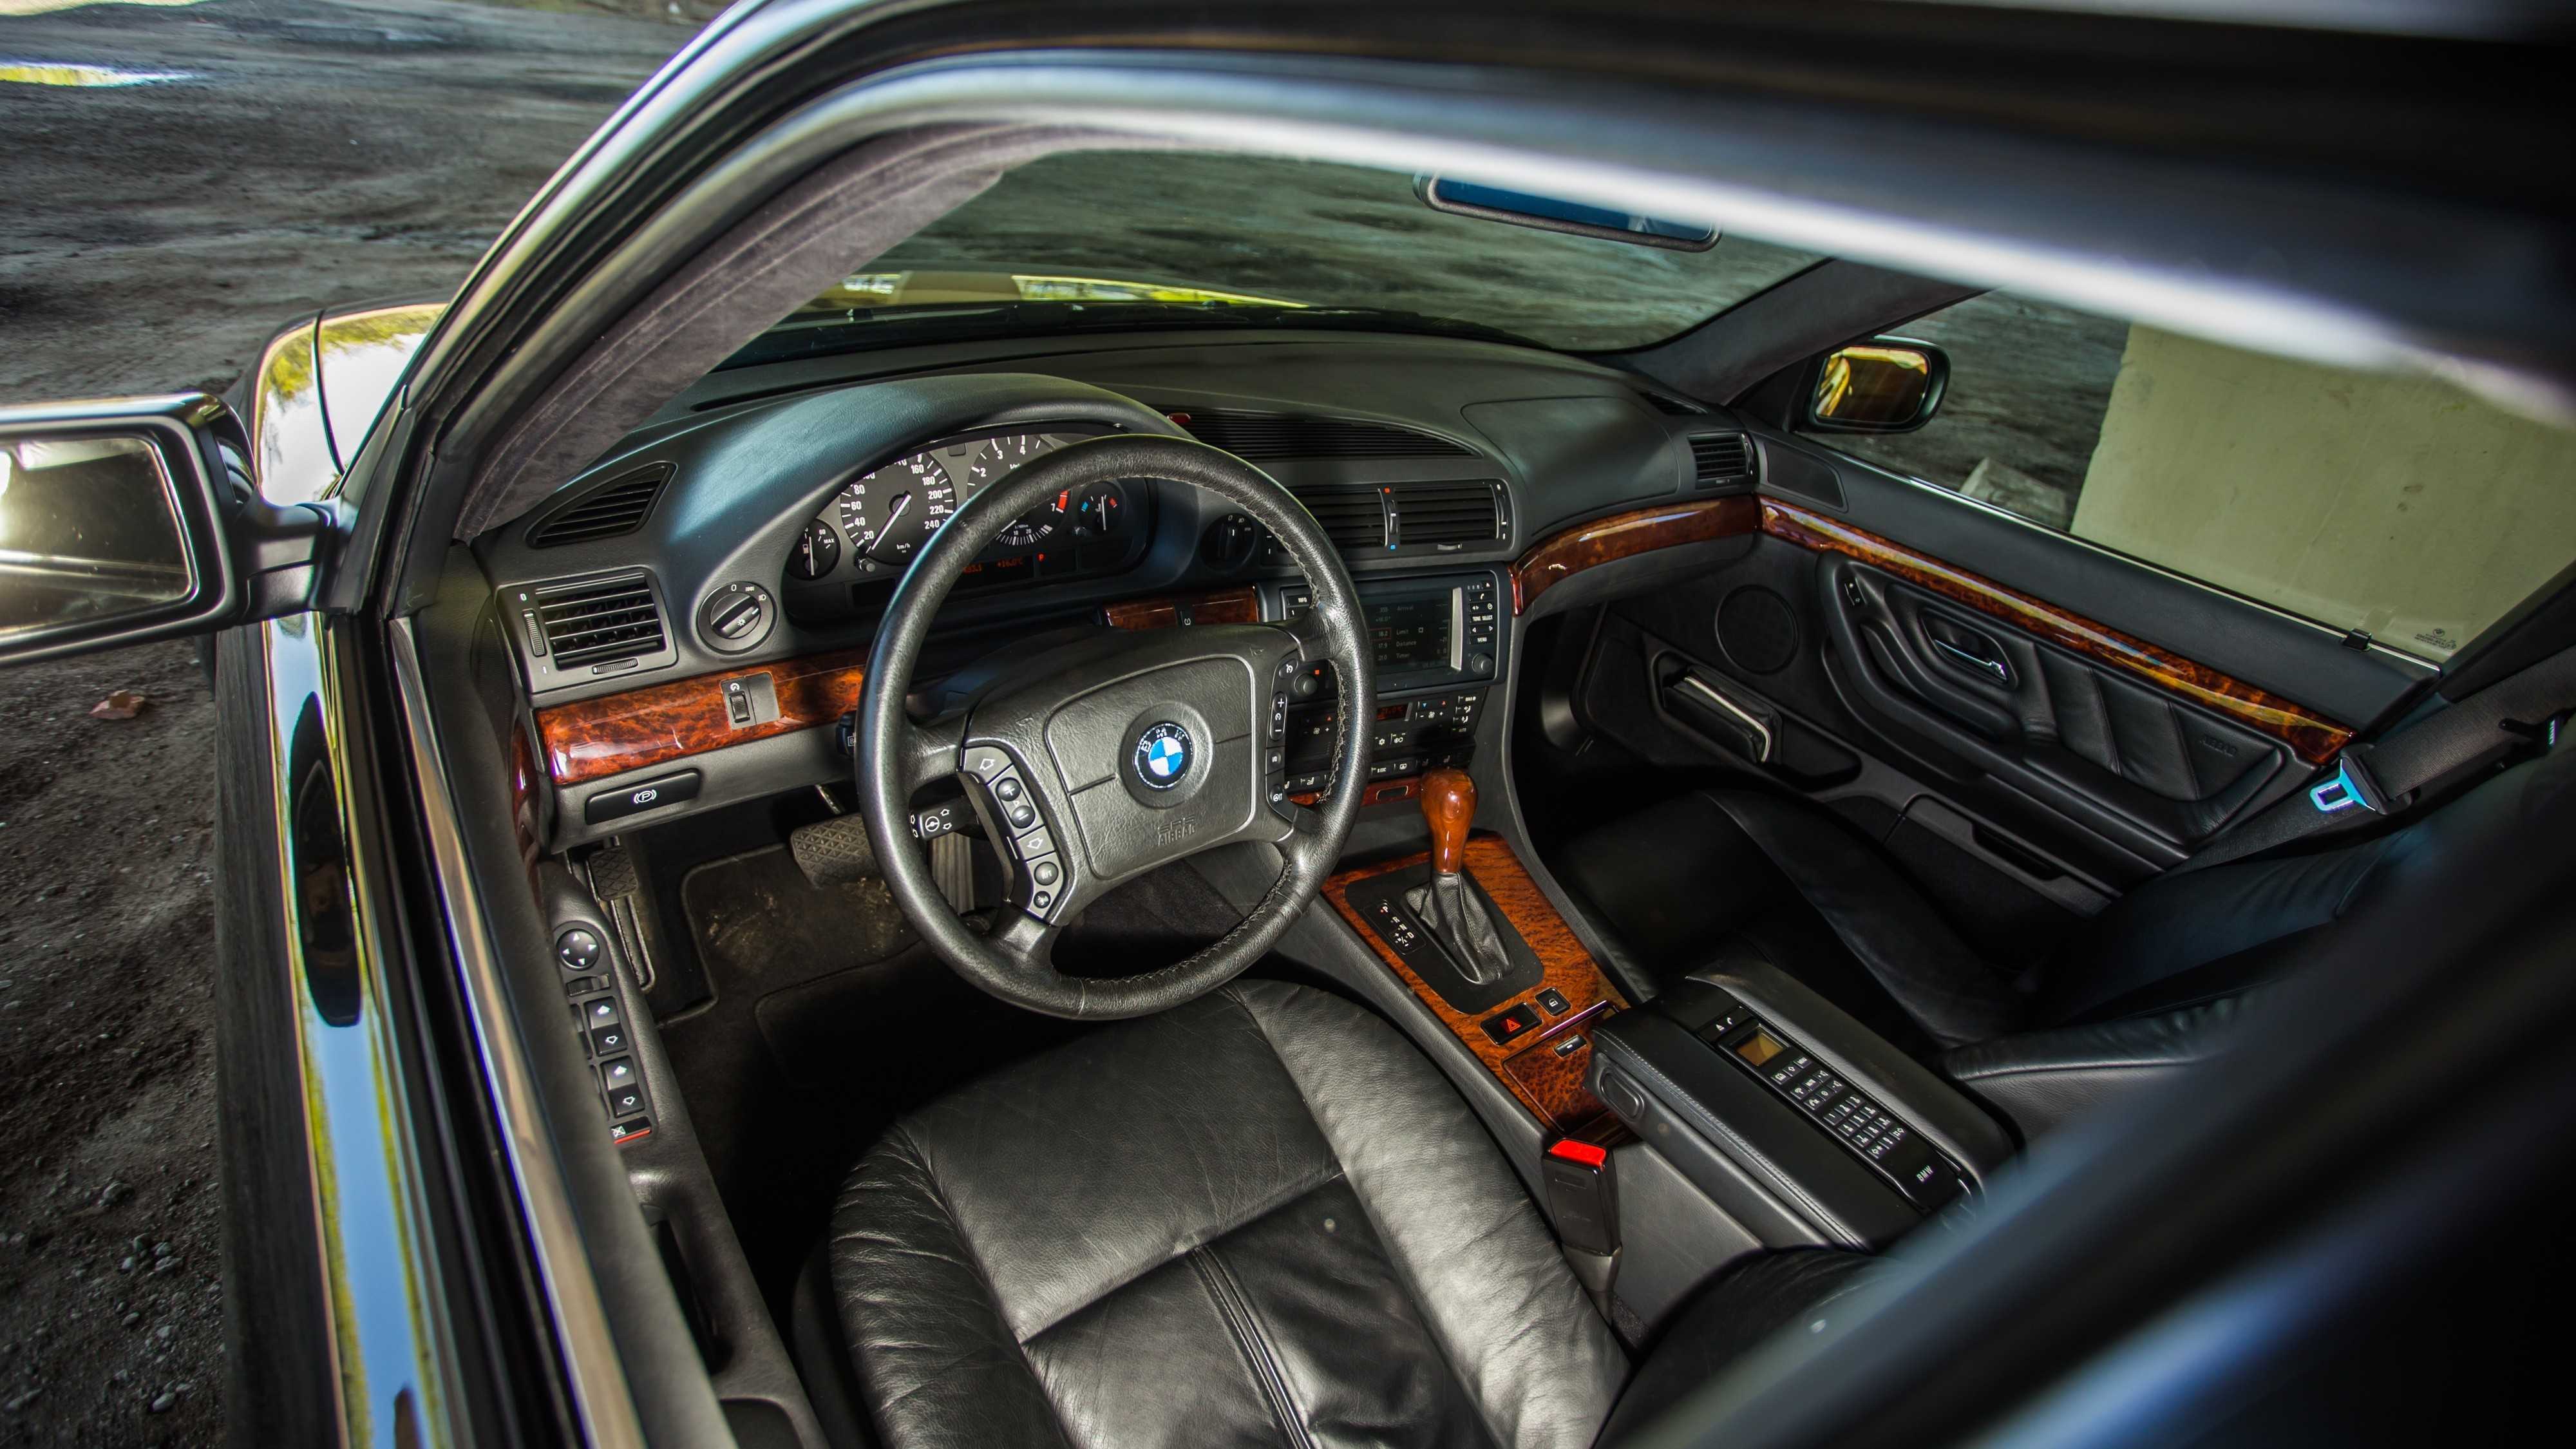 Тюнинг салона на BMW 7 серия E38 Тюнинг салона Cмотреть:  Обзор  Характеристики  Наличие  Описание Пакет аксессуаров КОМФОРТ от Skoda Комплект